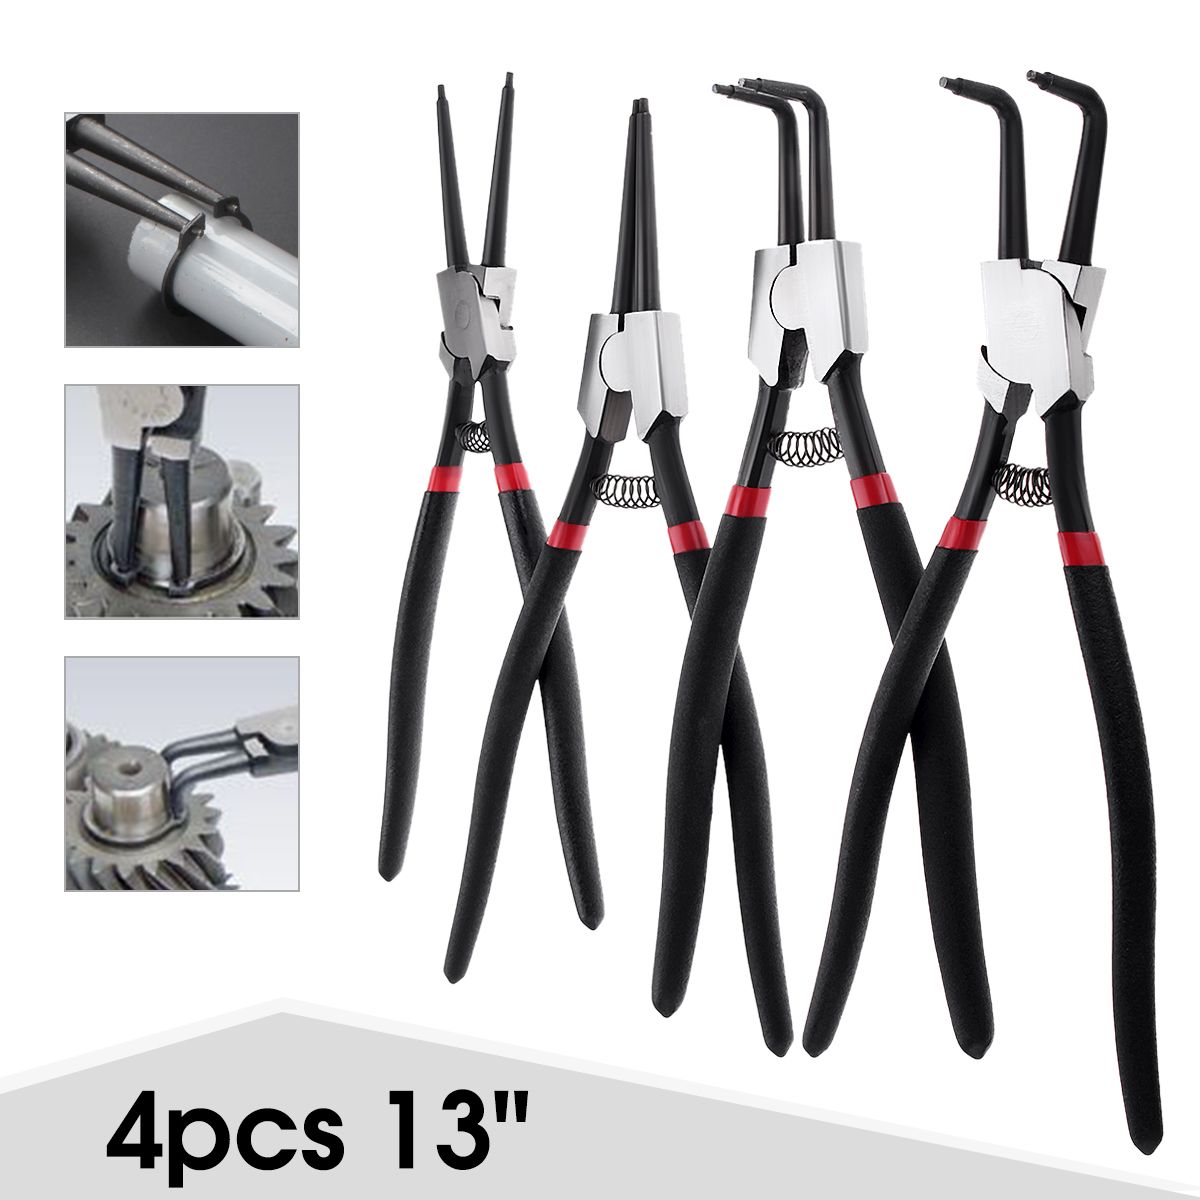 4Pcs-Portable-Circlip-Snap-Ring-Plier-Set-Internal-External-Workshop-Garage-Tool-1366332